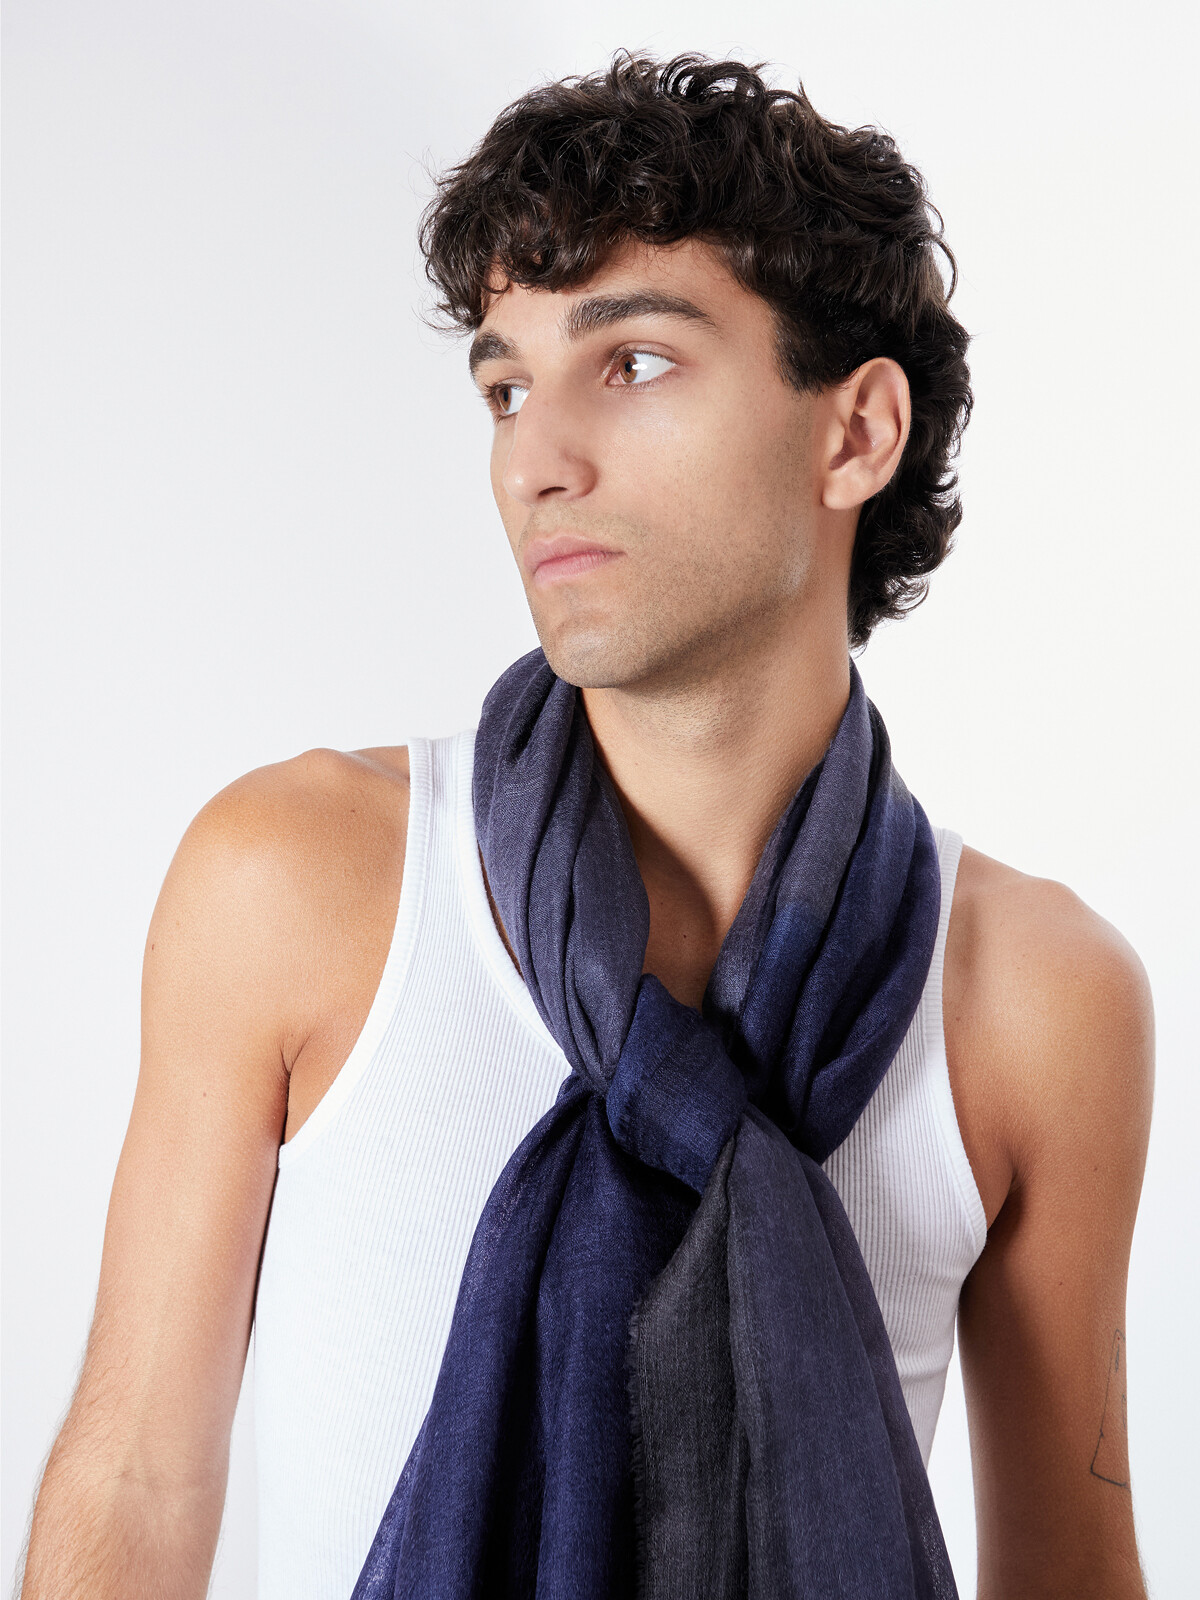 Handpainted scarf Image